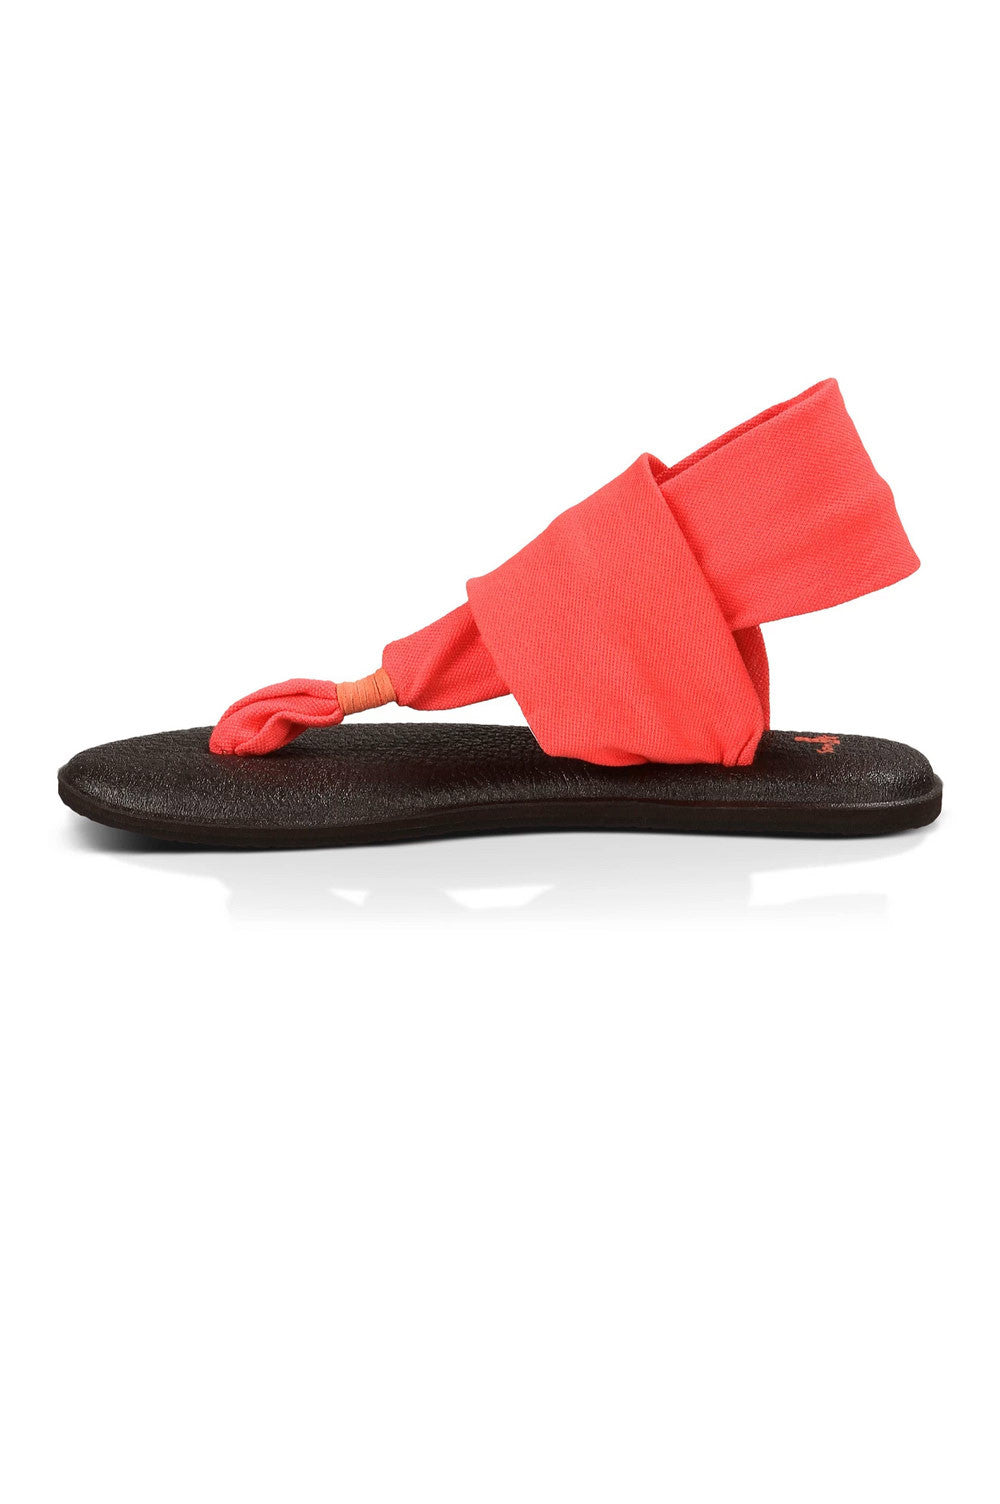 Sanuk Yoga Zen Flip Flop - Women's - Footwear